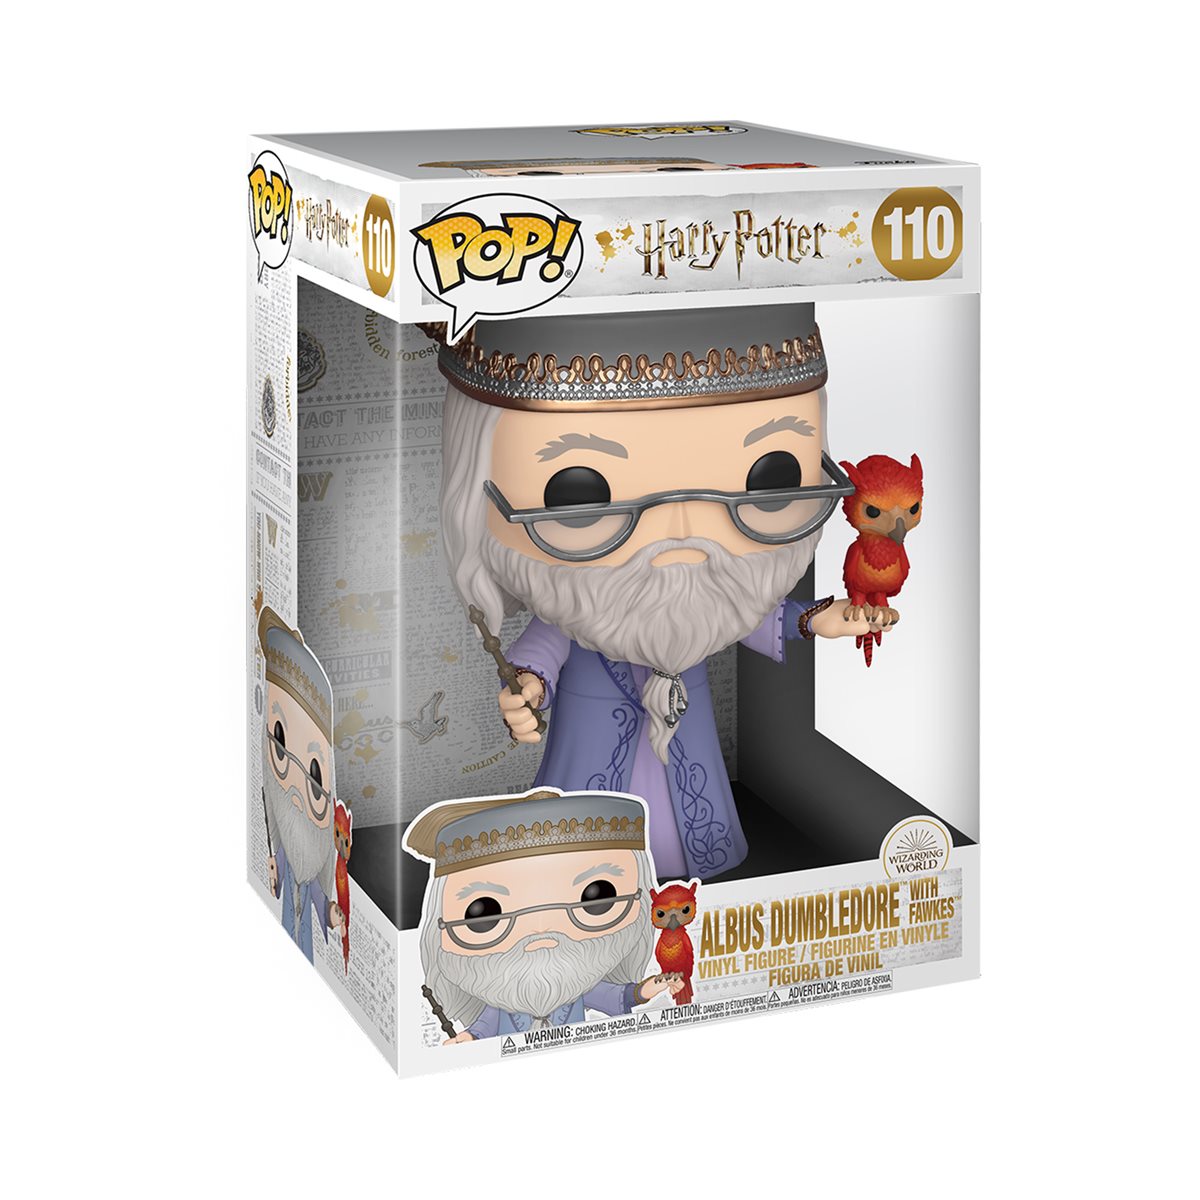 Harry Potter: Albus Dumbledore with Fawkes Pop! 10 in Vinyl Figure (110)